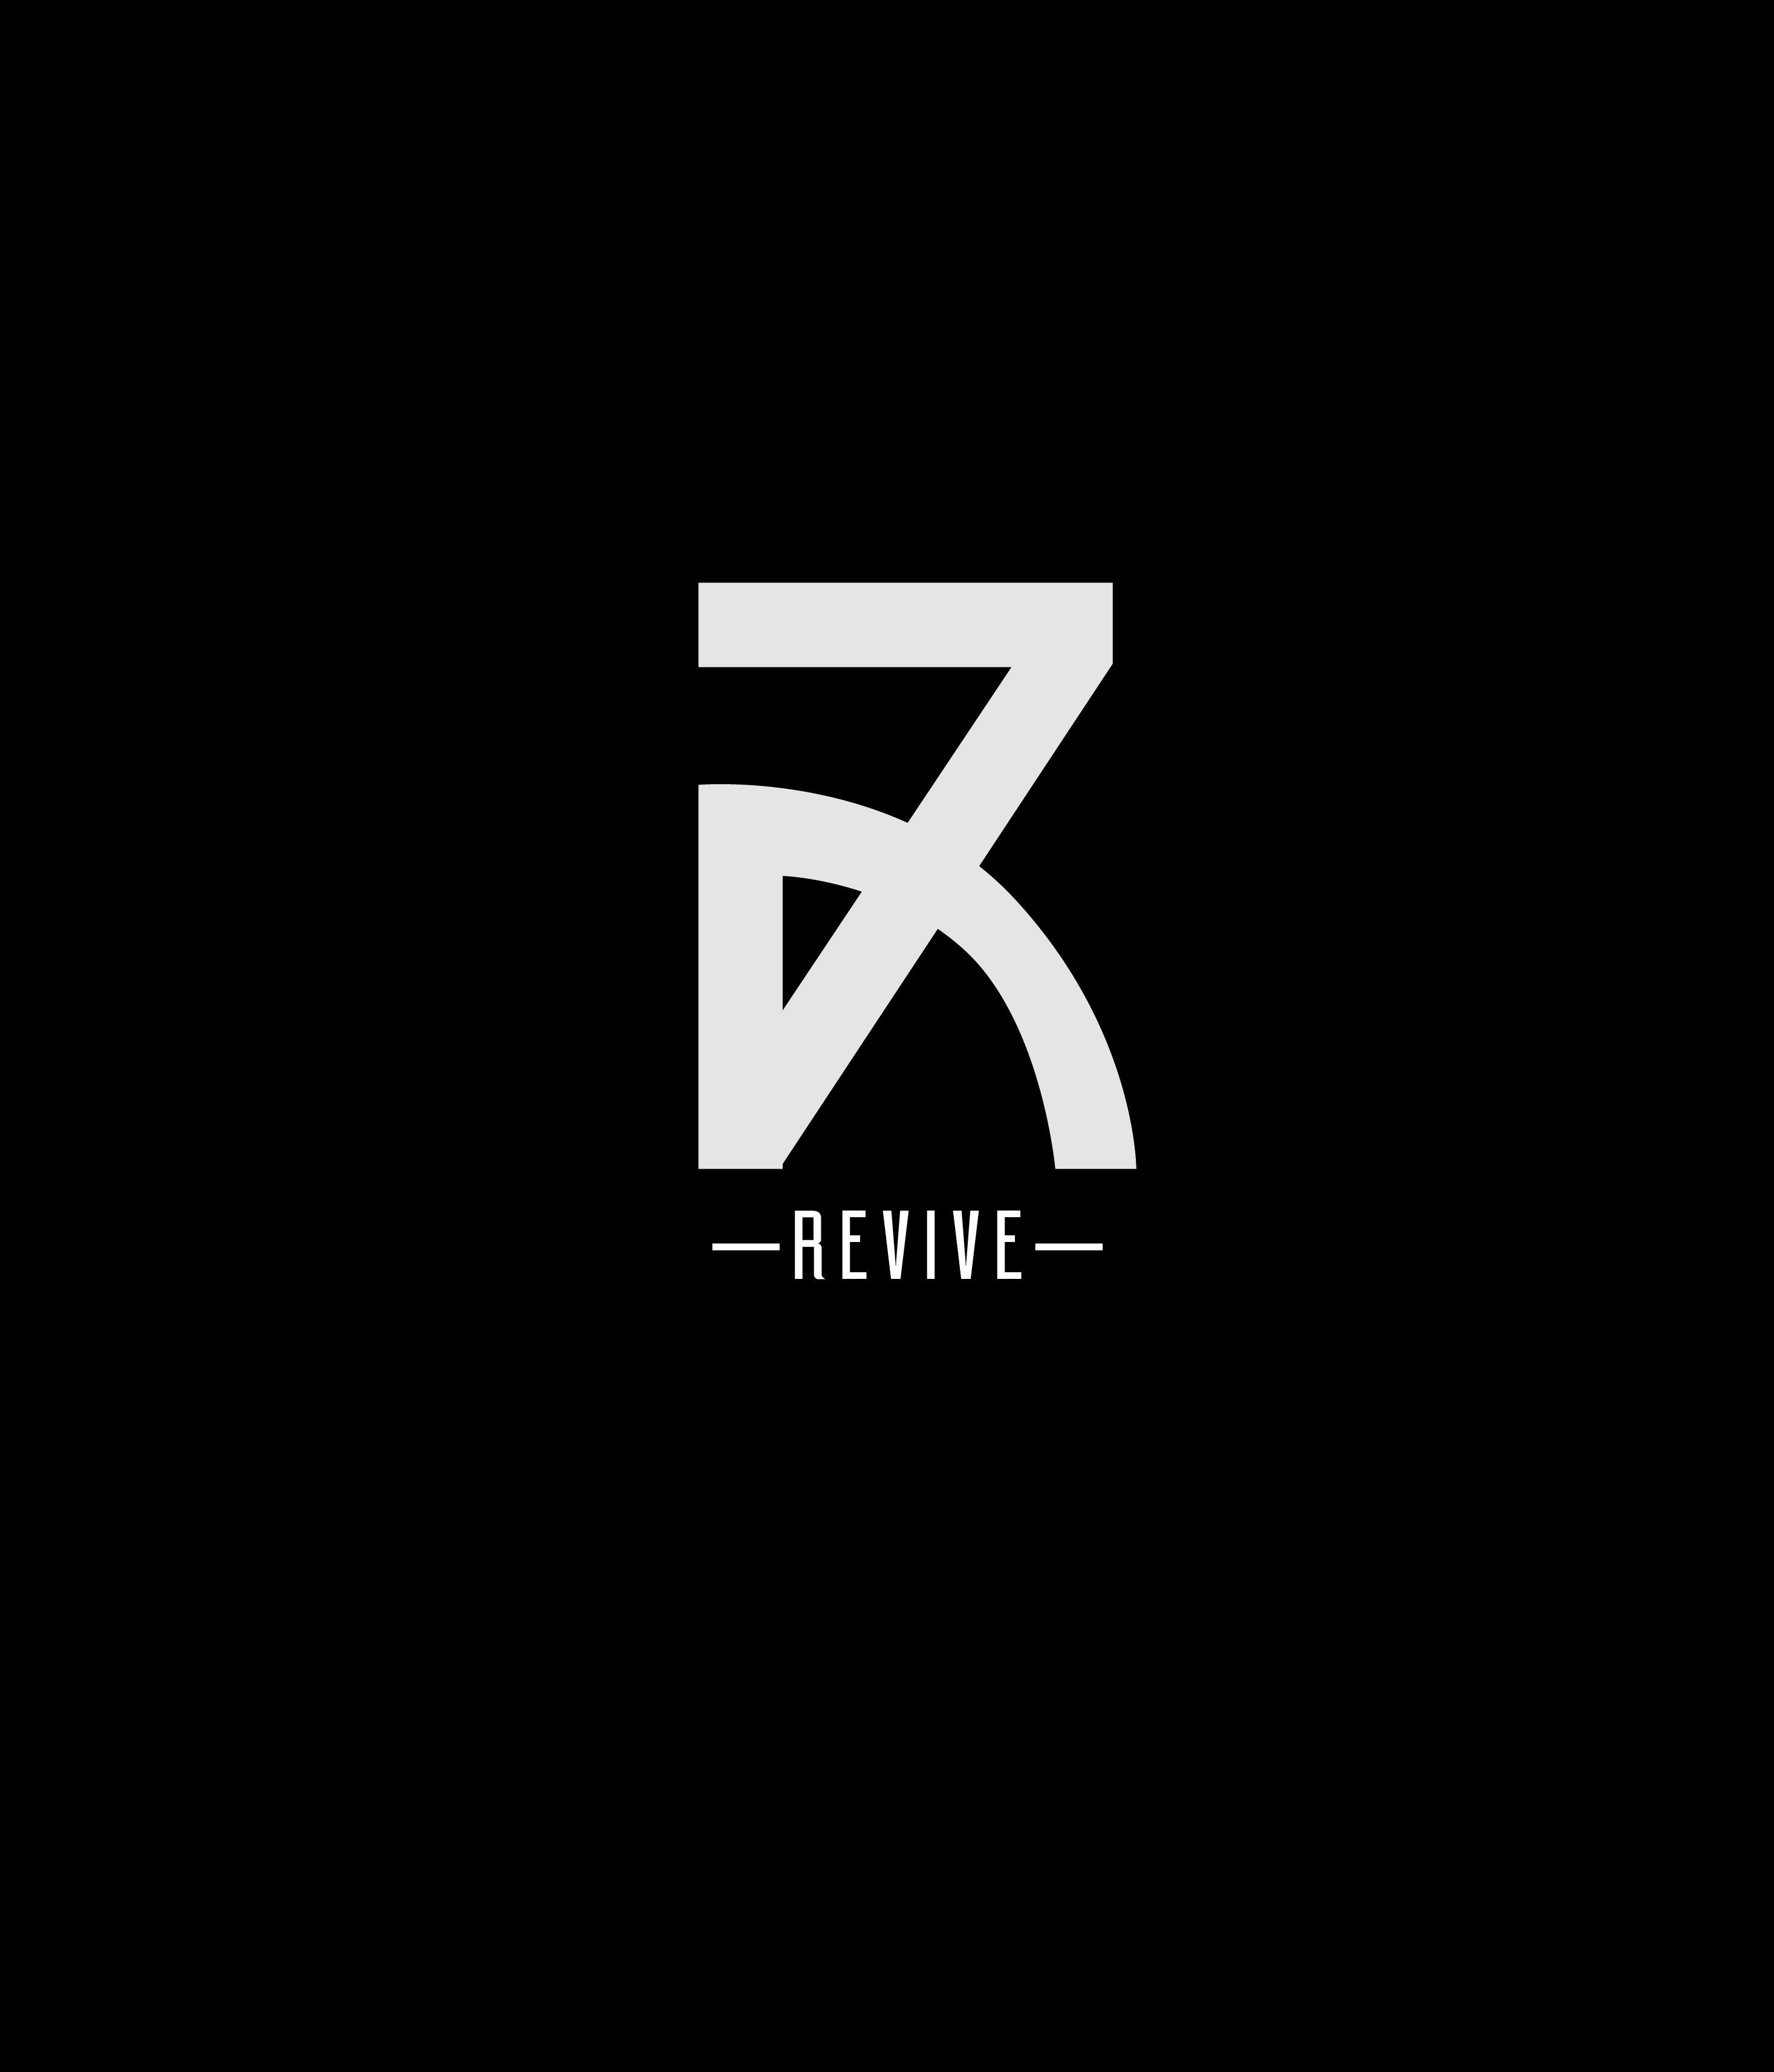 Revive Logo - Revive Logo 1 | Bauer Branding.